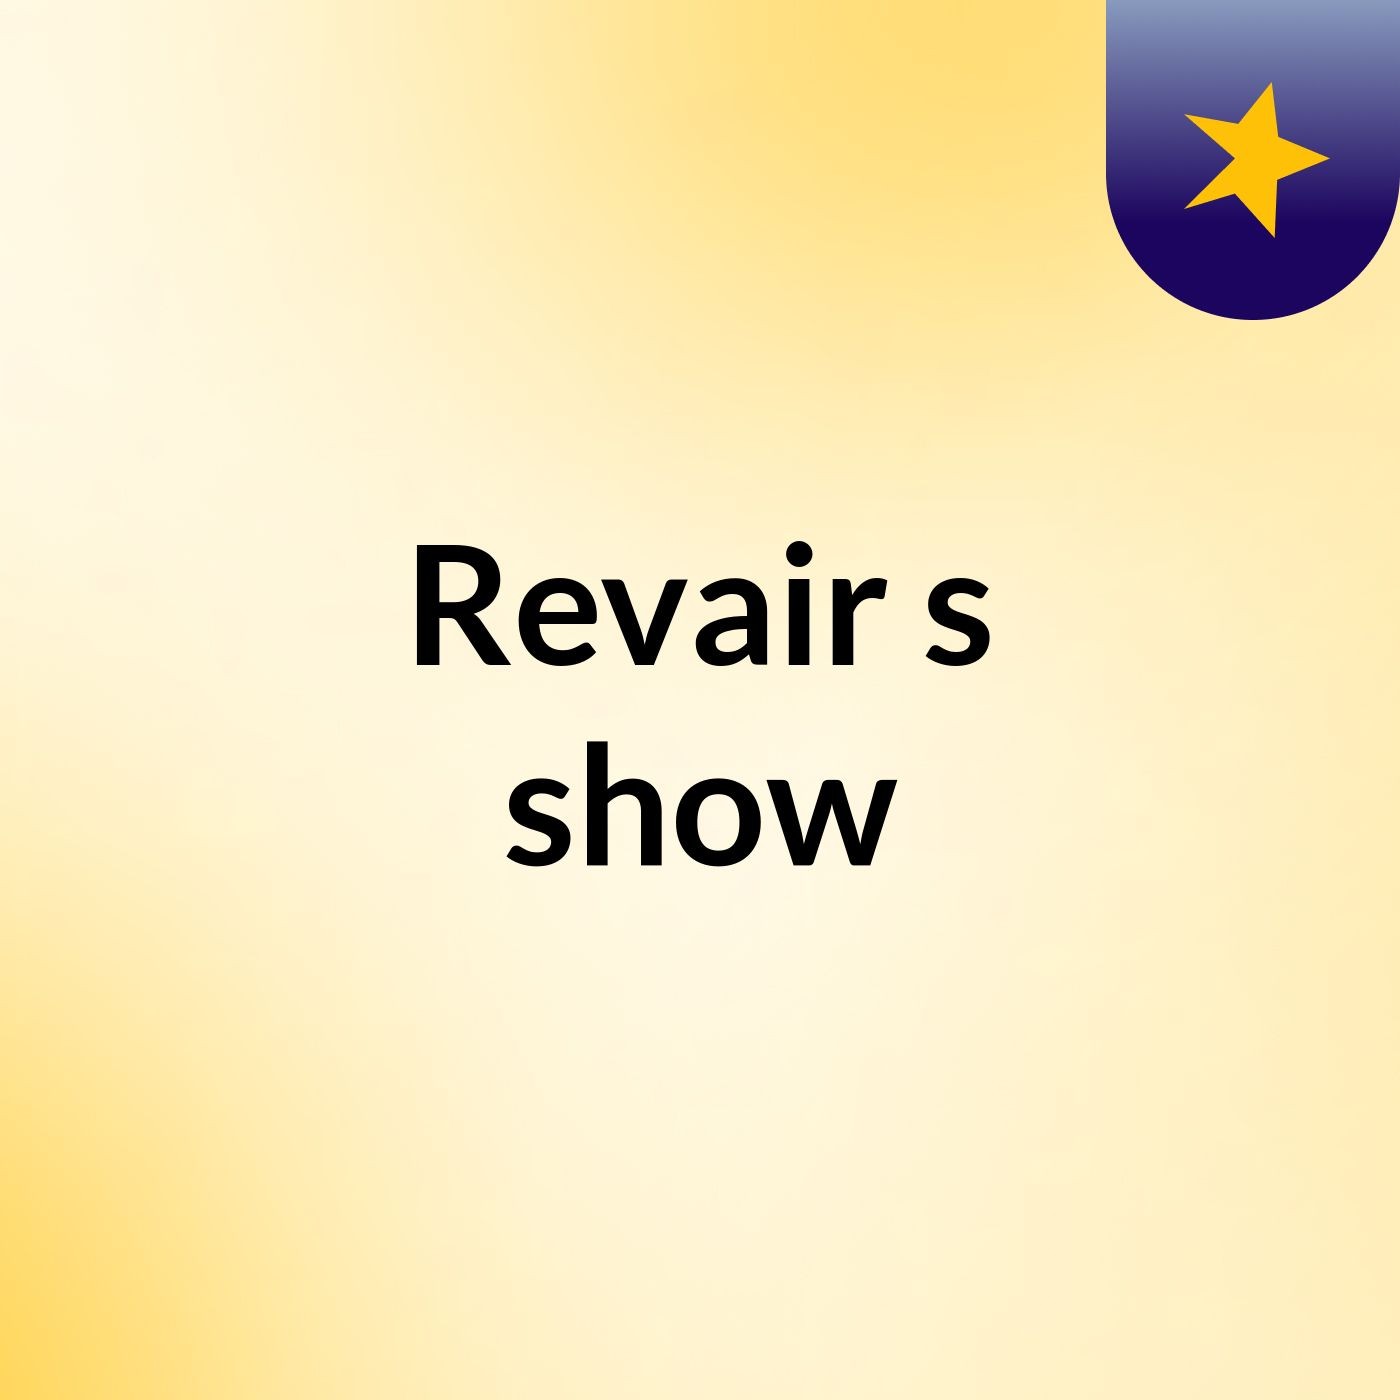 Revair's show